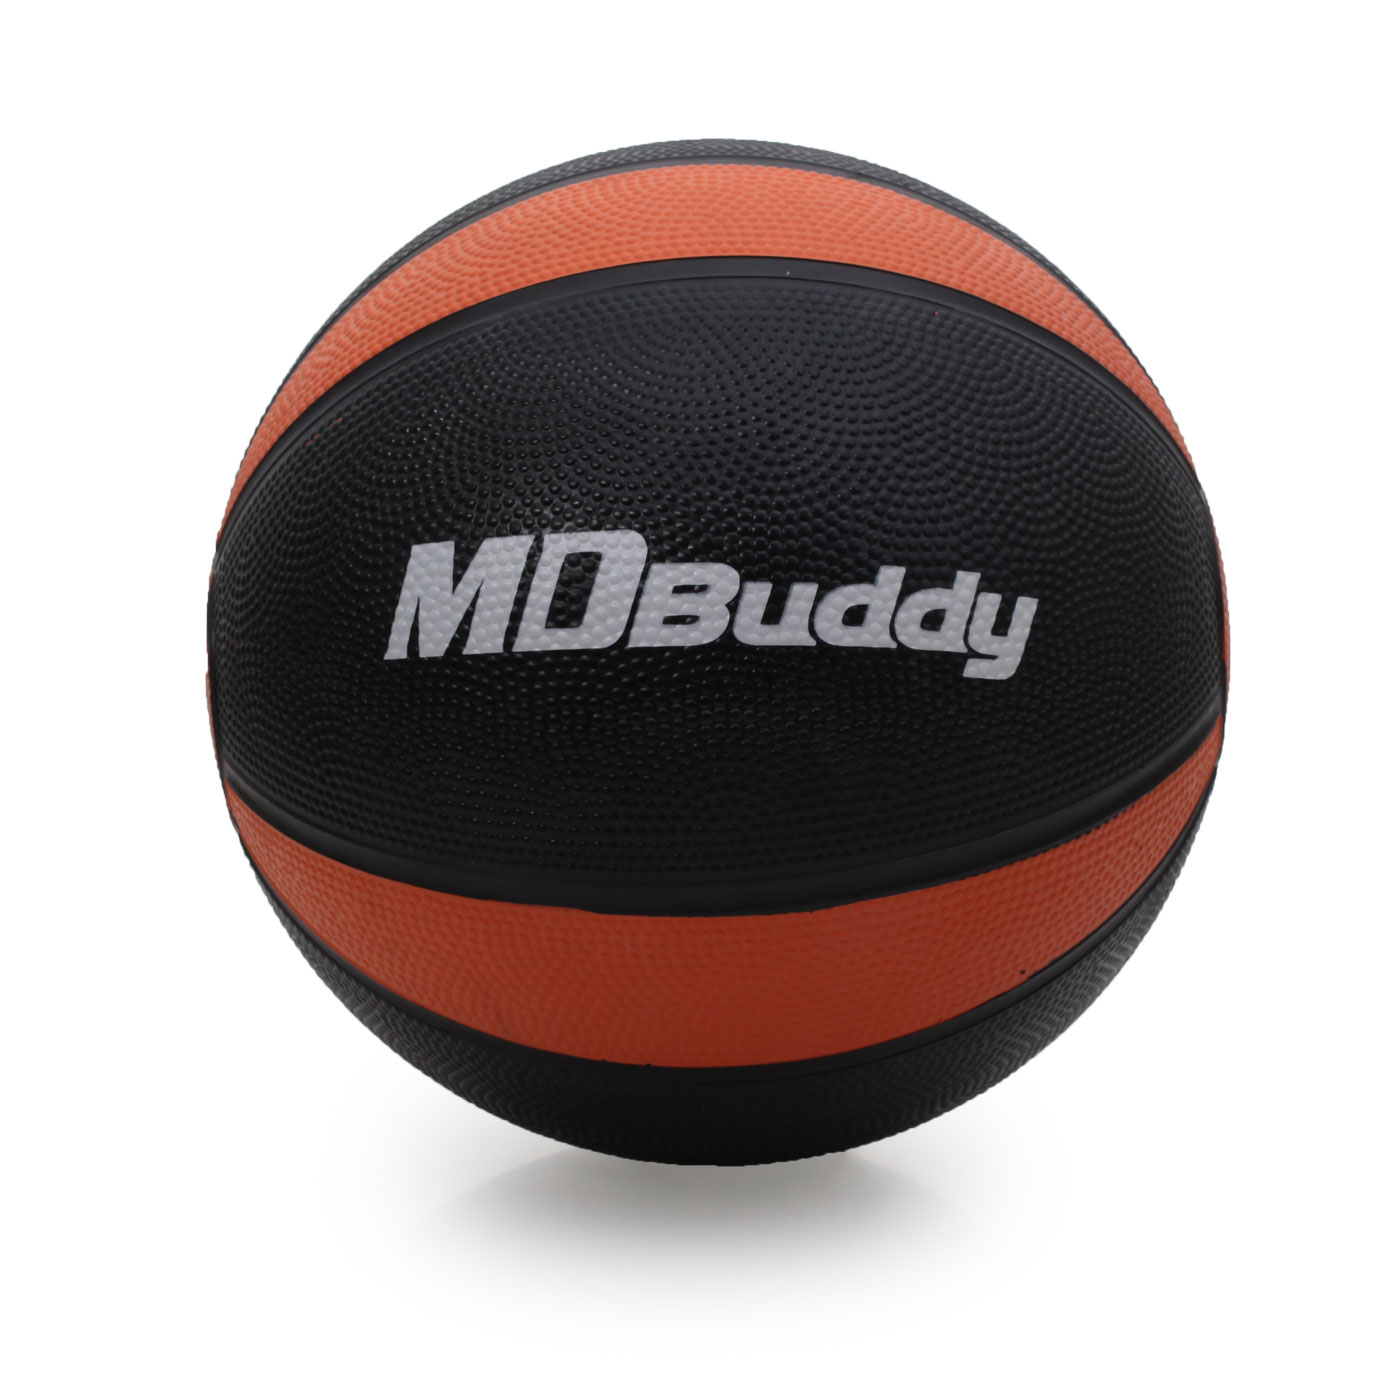 MDBuddy 藥球(4KG) 6009701 - 隨機